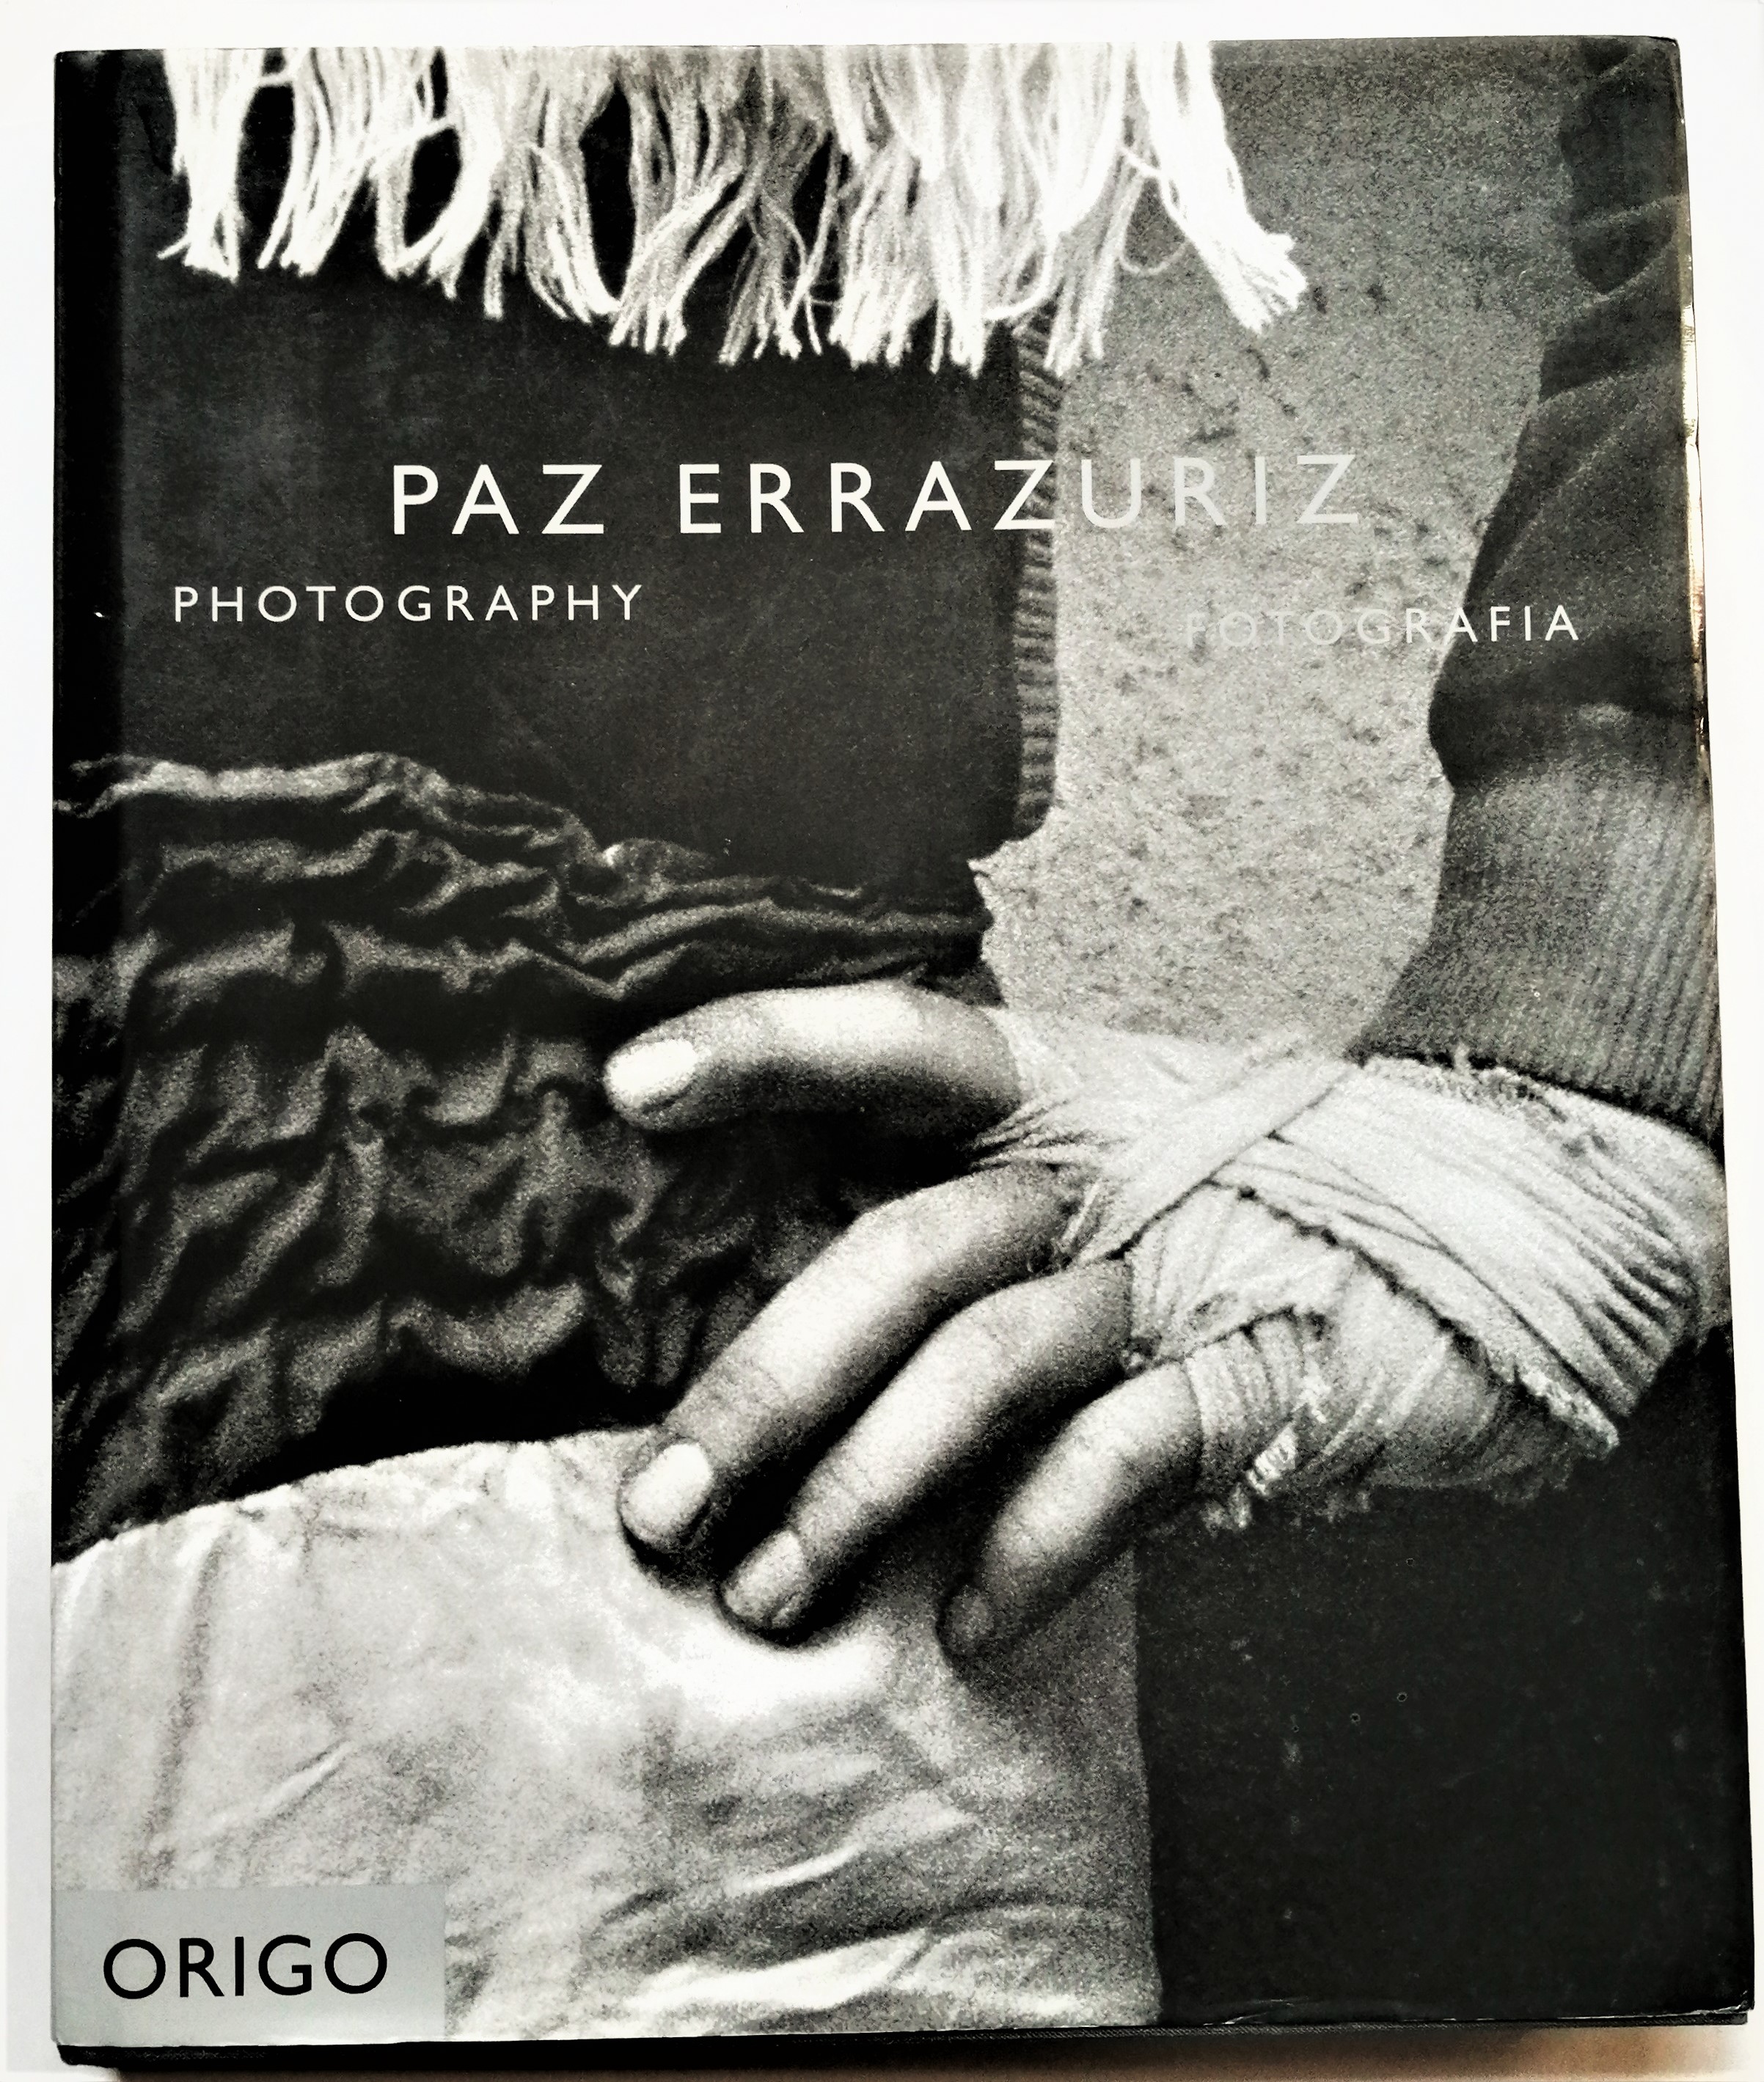 Paz Errazuriz - Fotografía/photography (1983-2002)